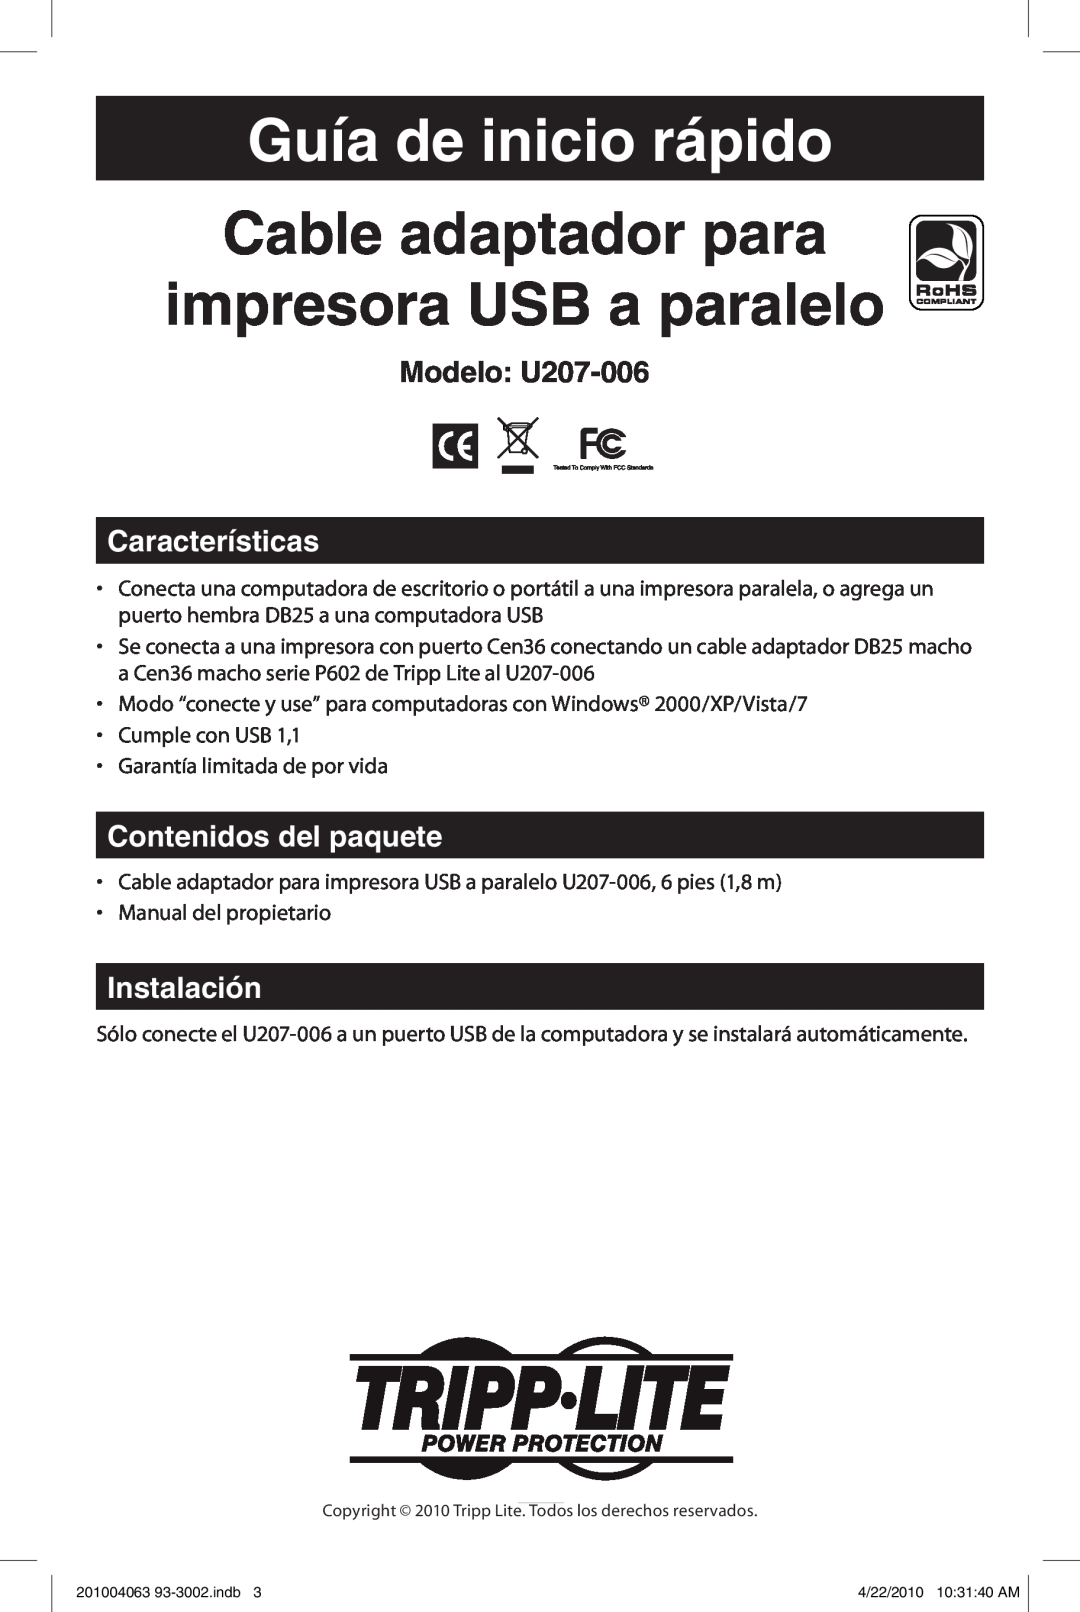 Tripp Lite Guía de inicio rápido, Cable adaptador para impresora USB a paralelo, Modelo U207-006, Características 